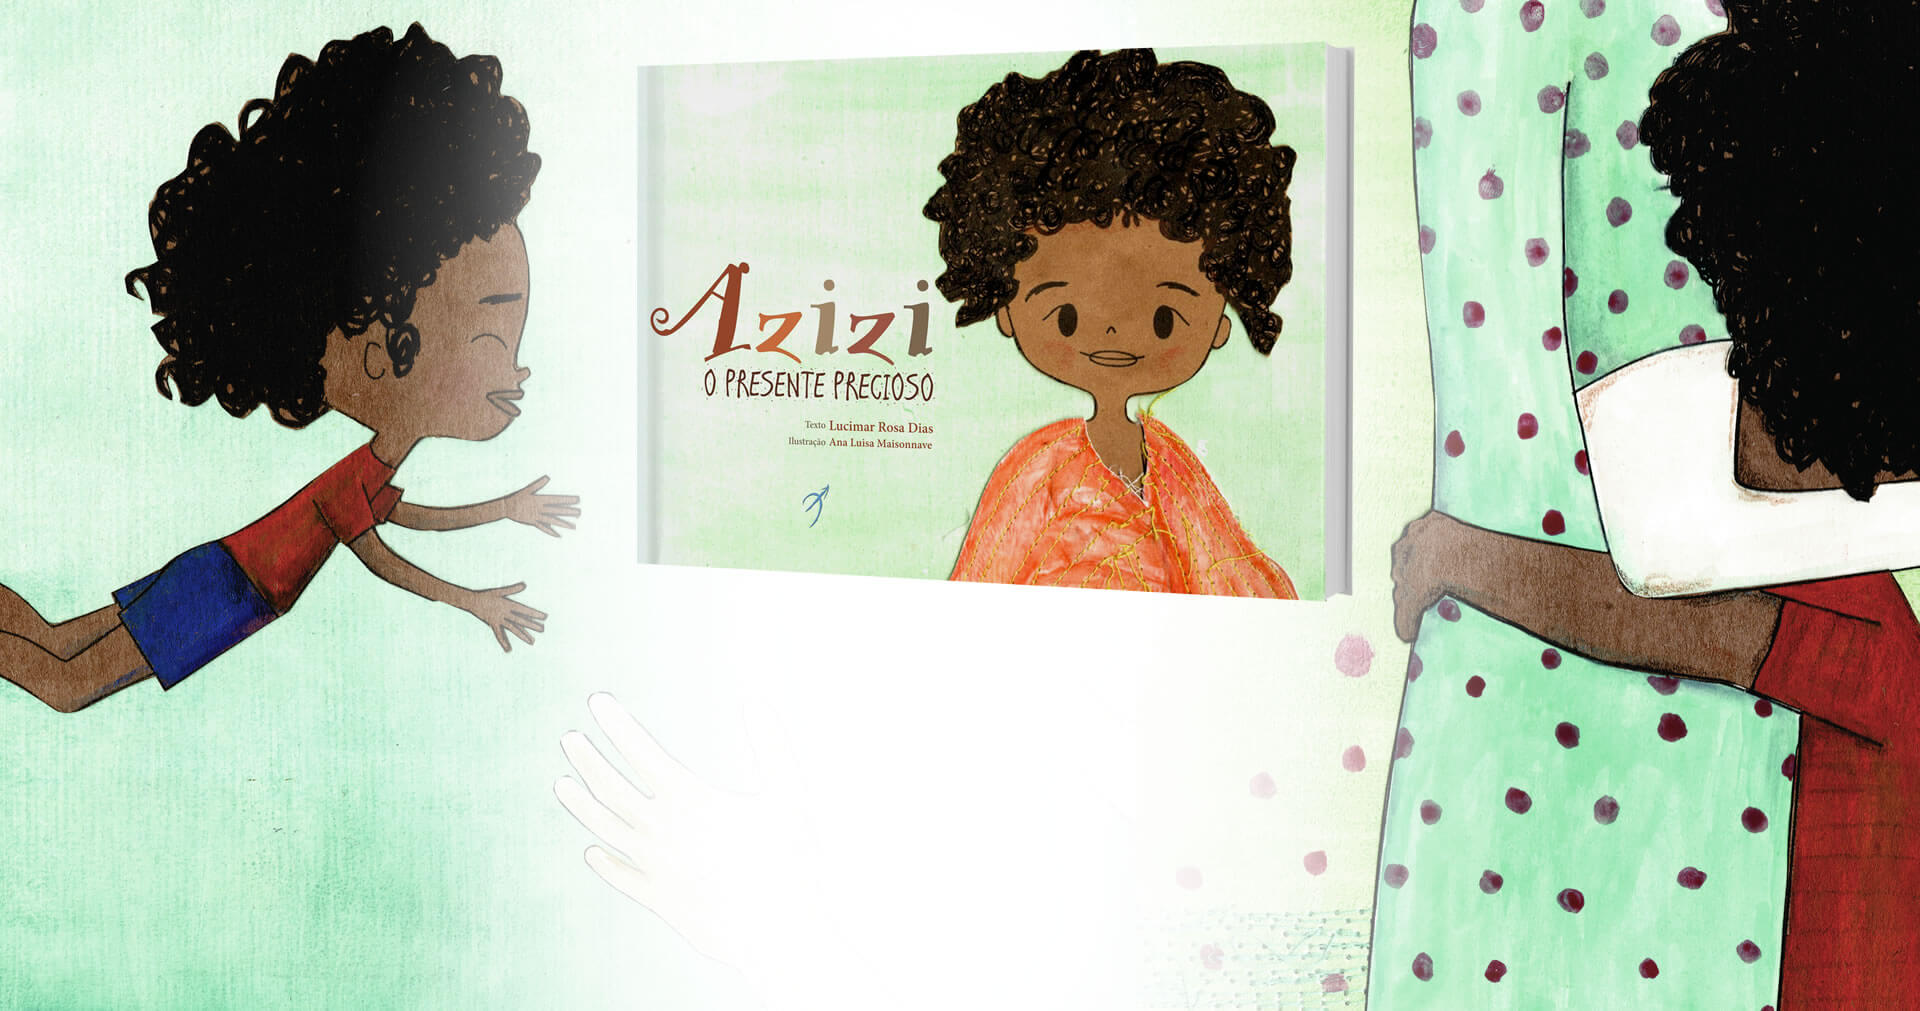 Press Release | Azizi, the precious gift tells a story of interracial adoption